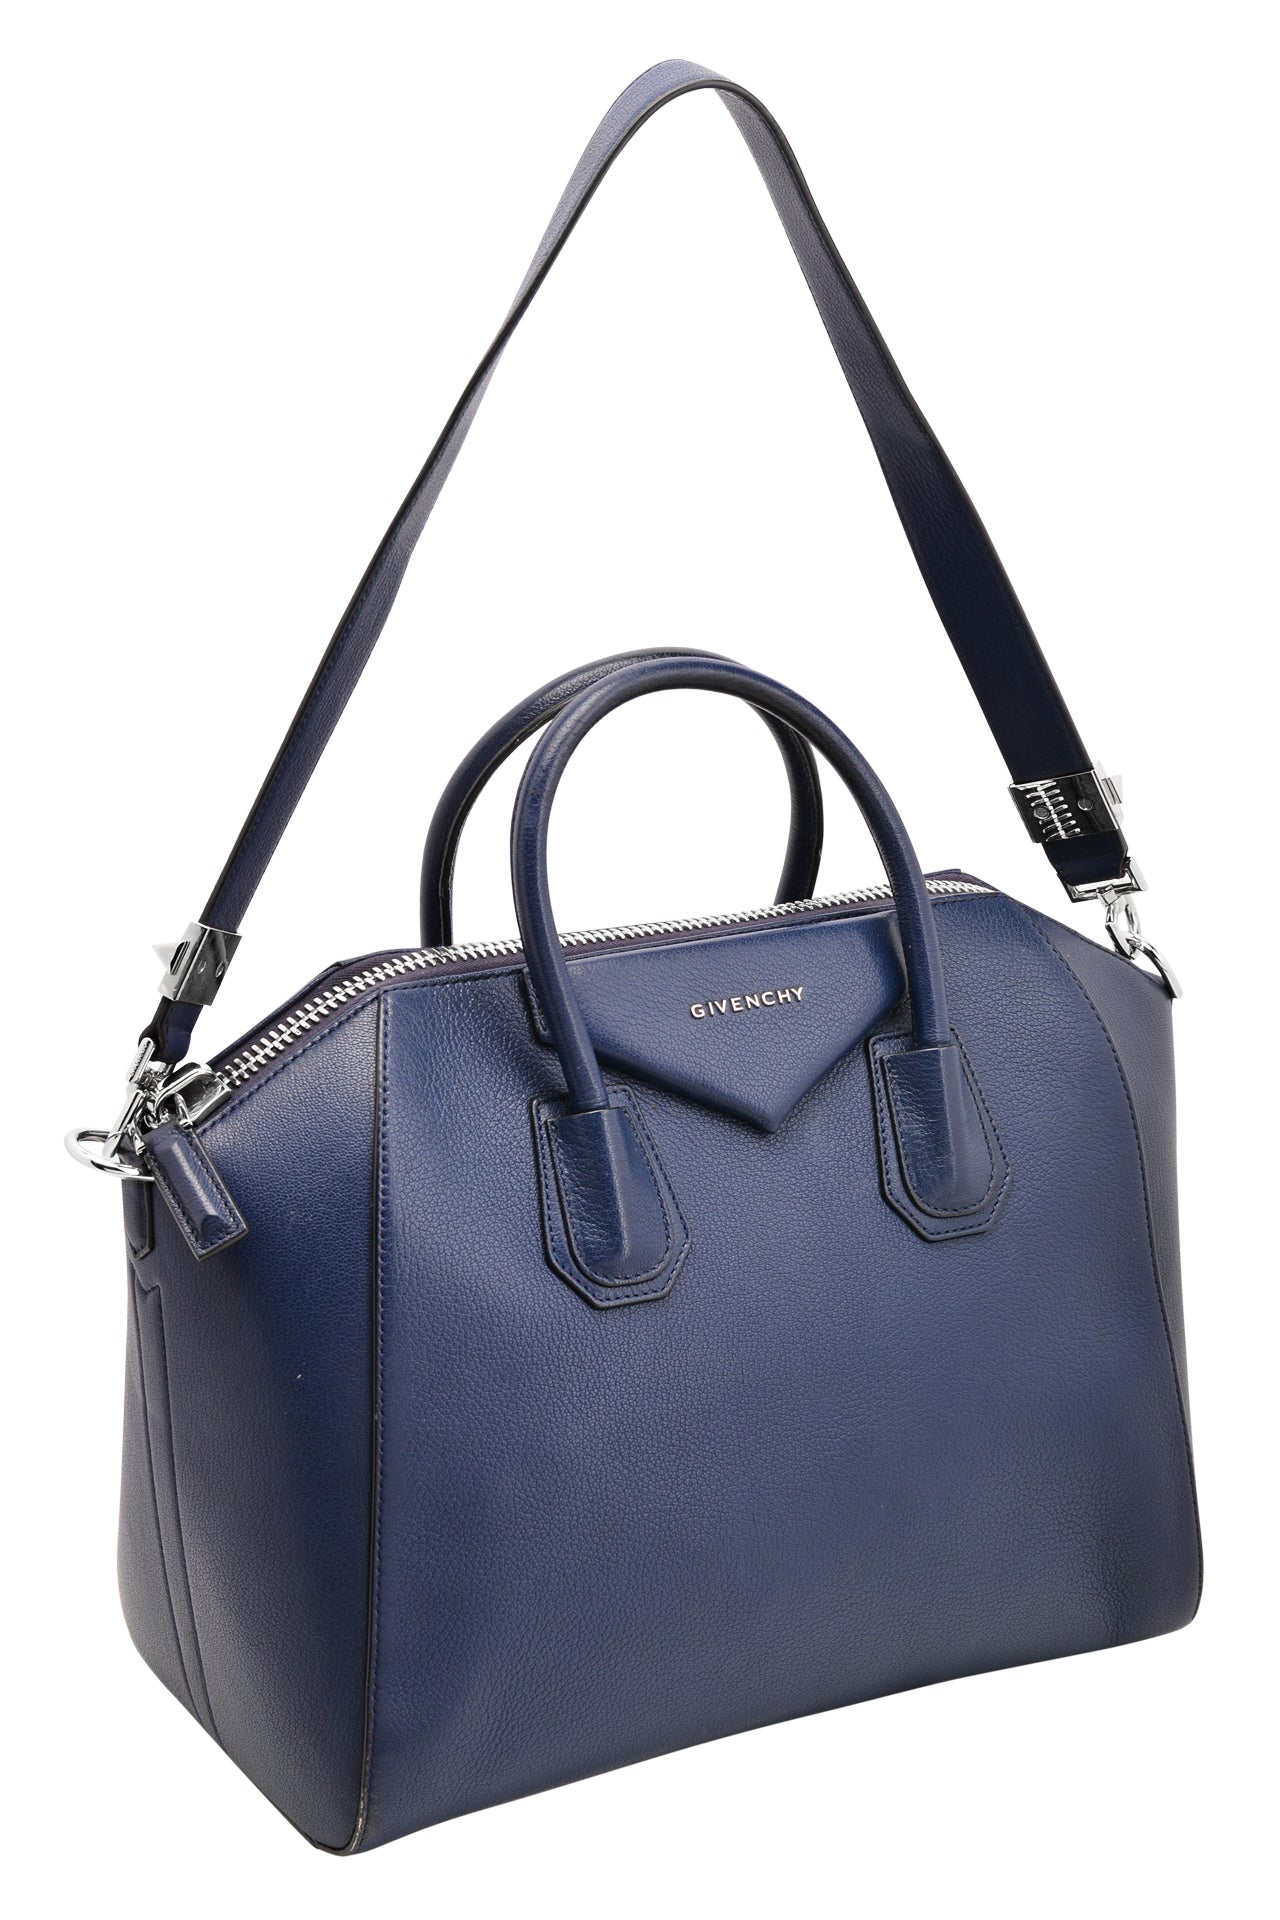 Givenchy Blue Leather Medium Antigona Bag